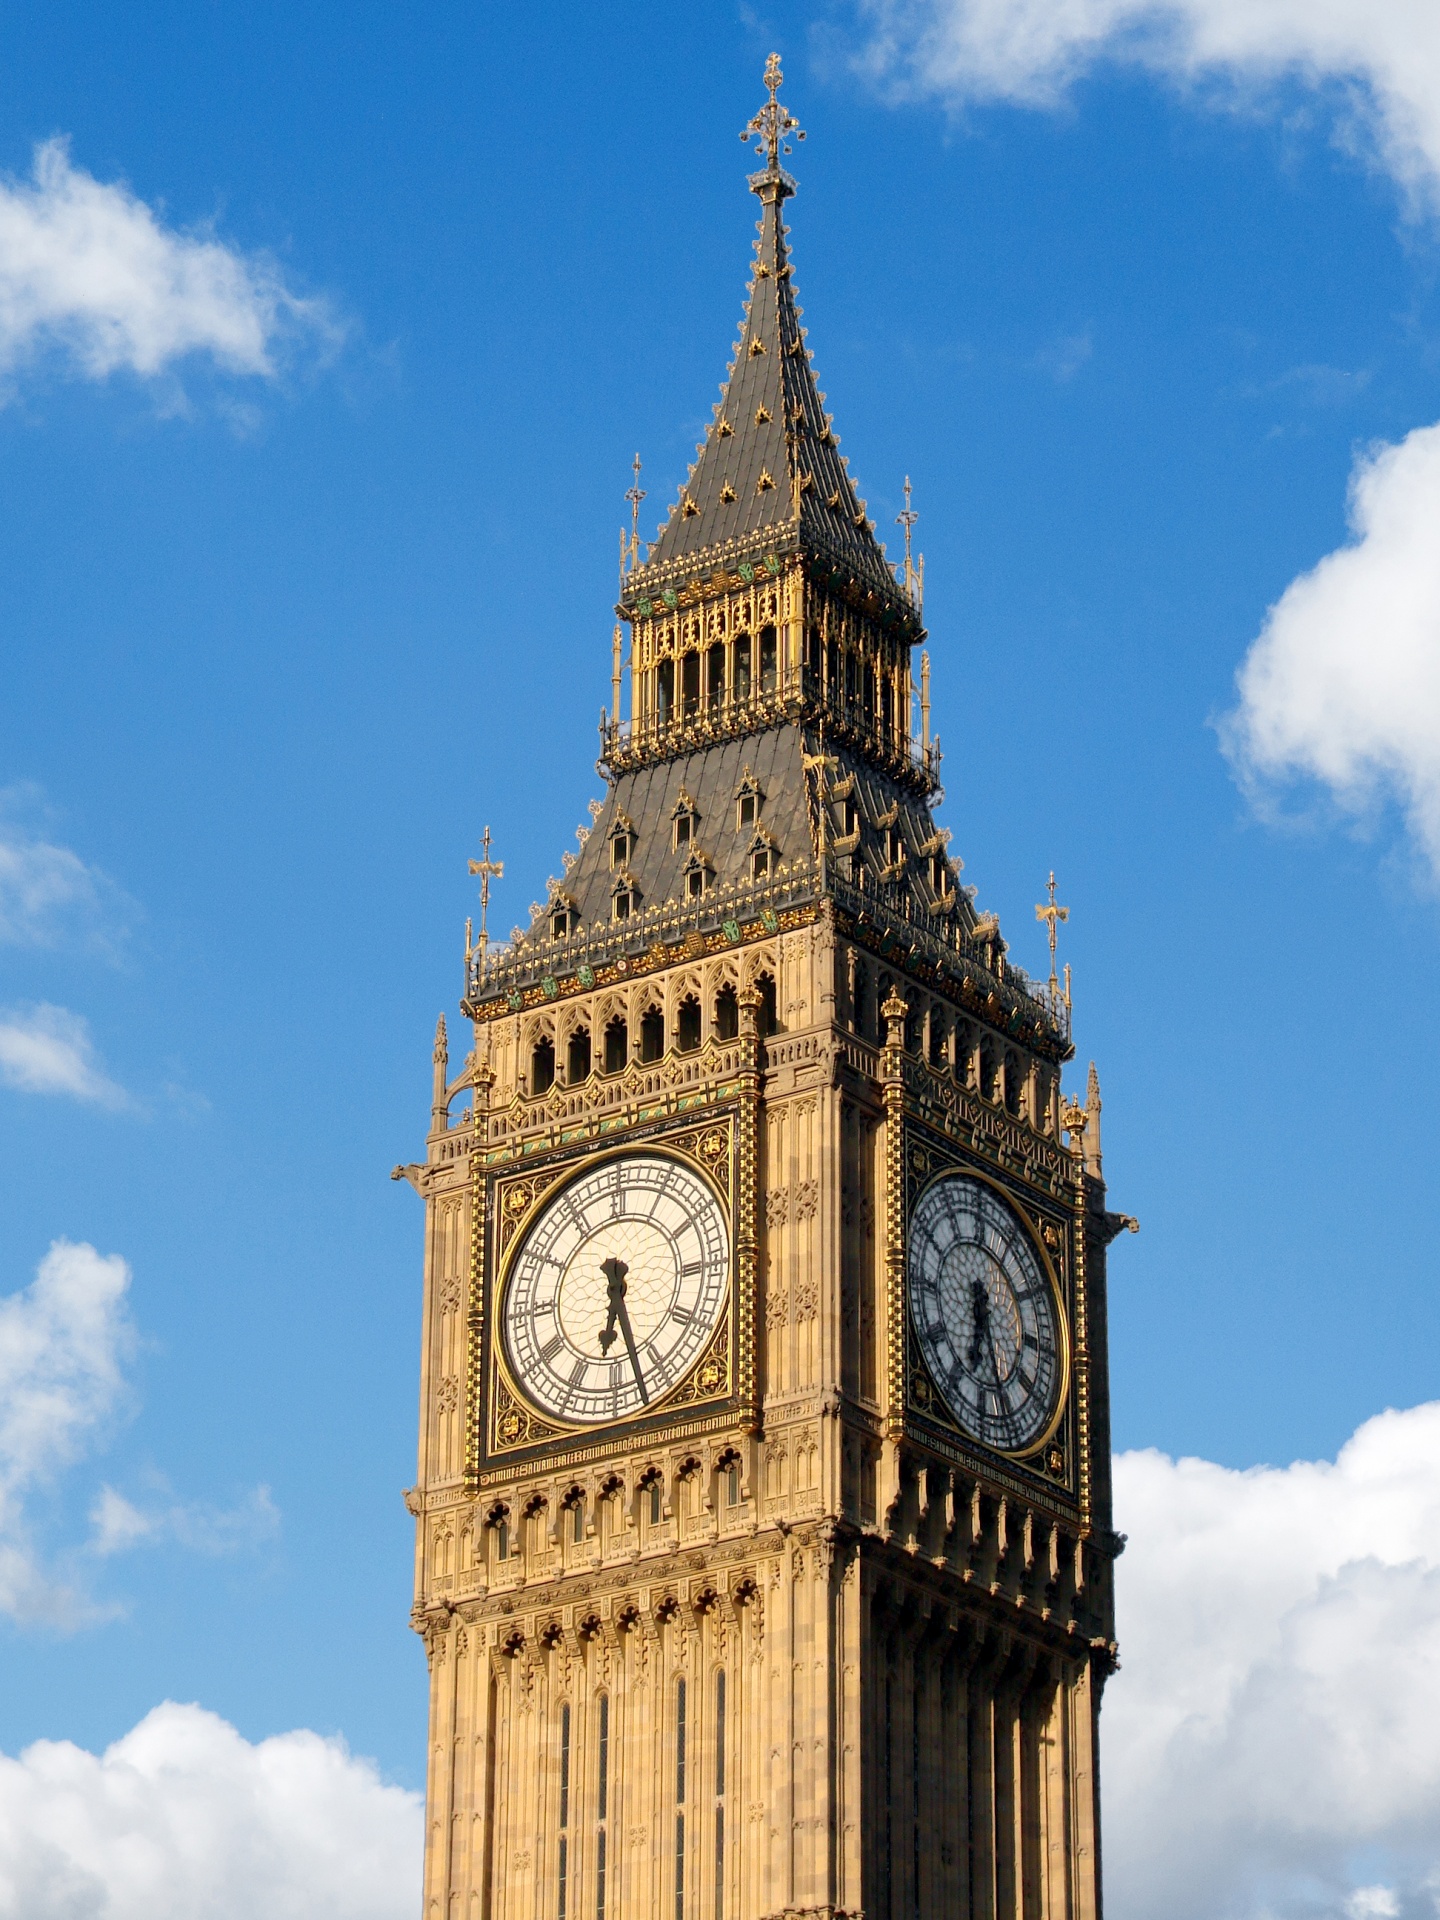 Big ben clock tower in London, England, UK